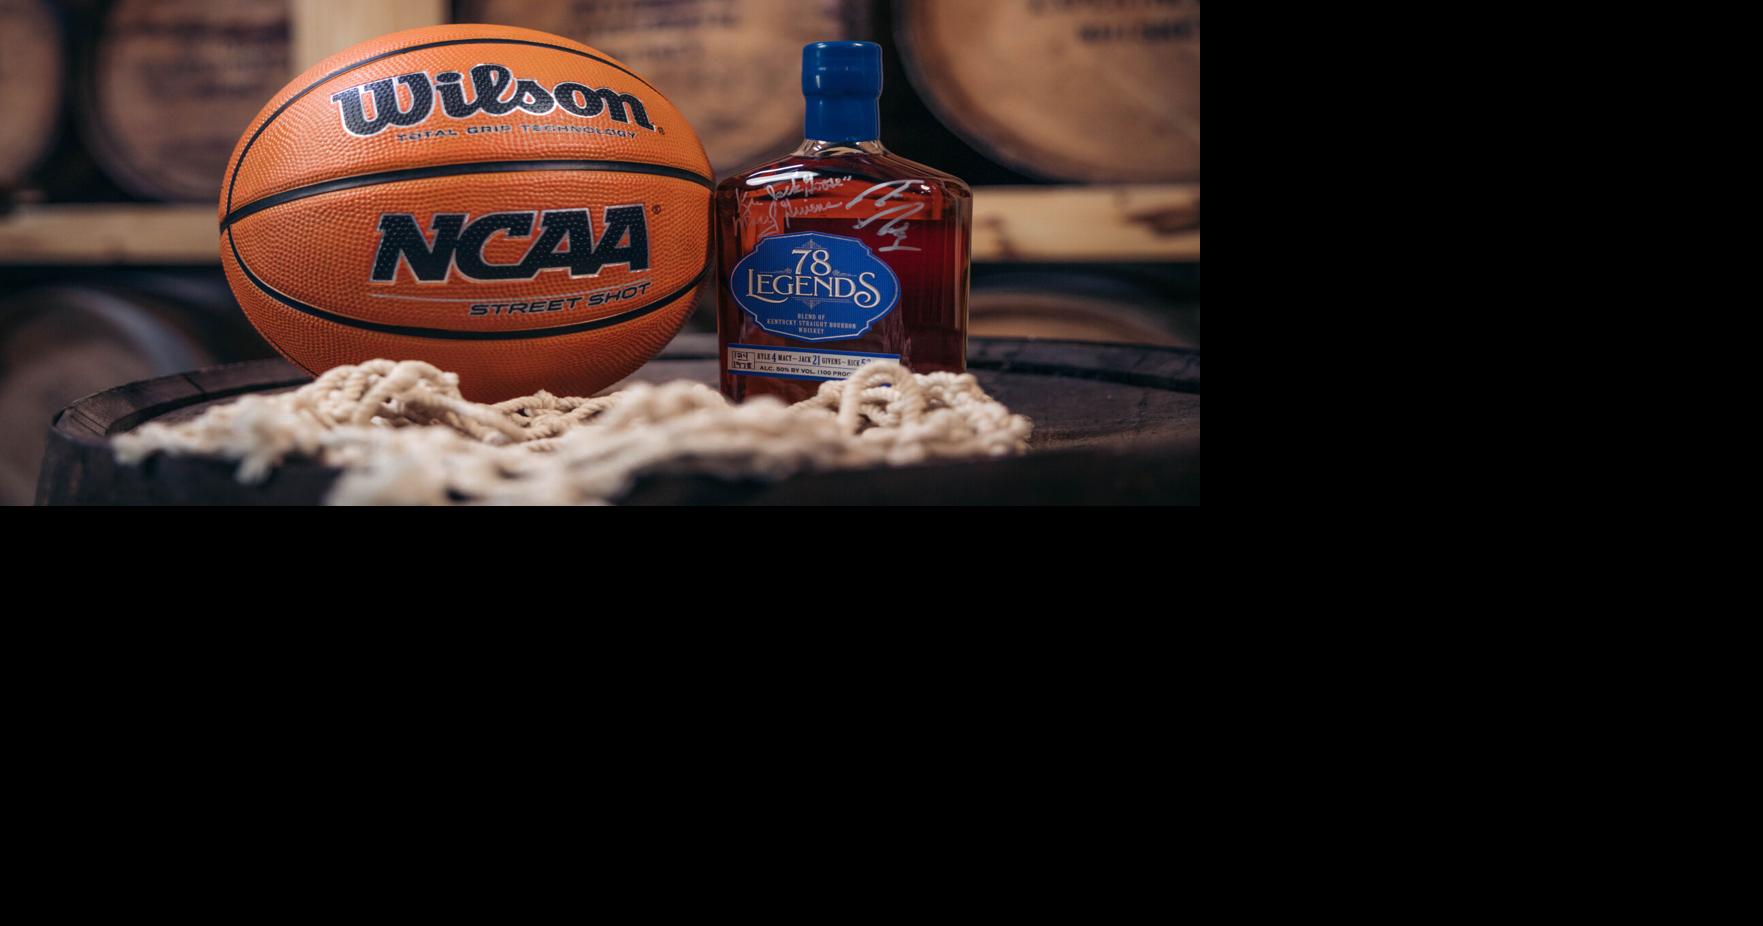 3 University of Kentucky NCAA champs releasing '78 Legends' limited edition bourbon